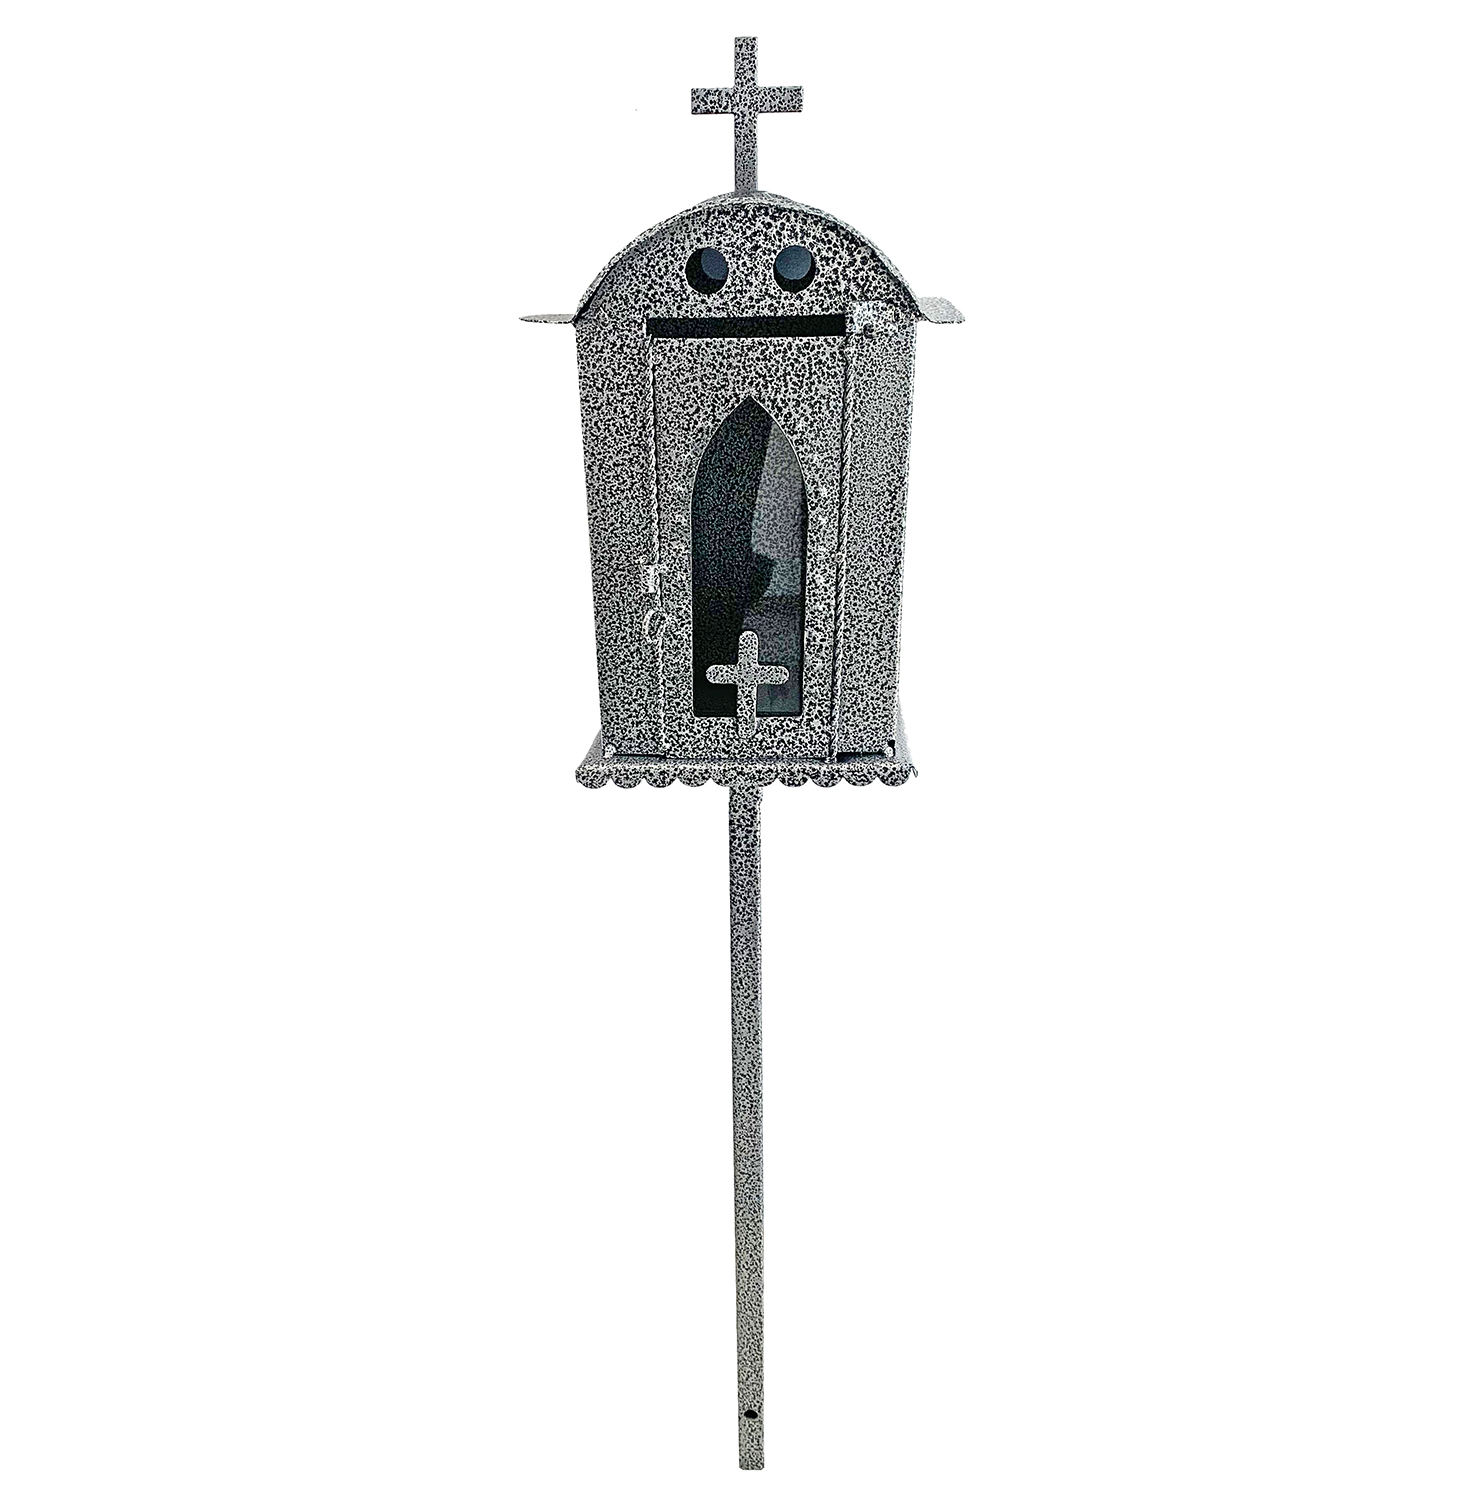 Felinar metalic pentru cimitir, Grs, F04, vopsit electrostatic, Gri granit, cu picior, 95x21 cm